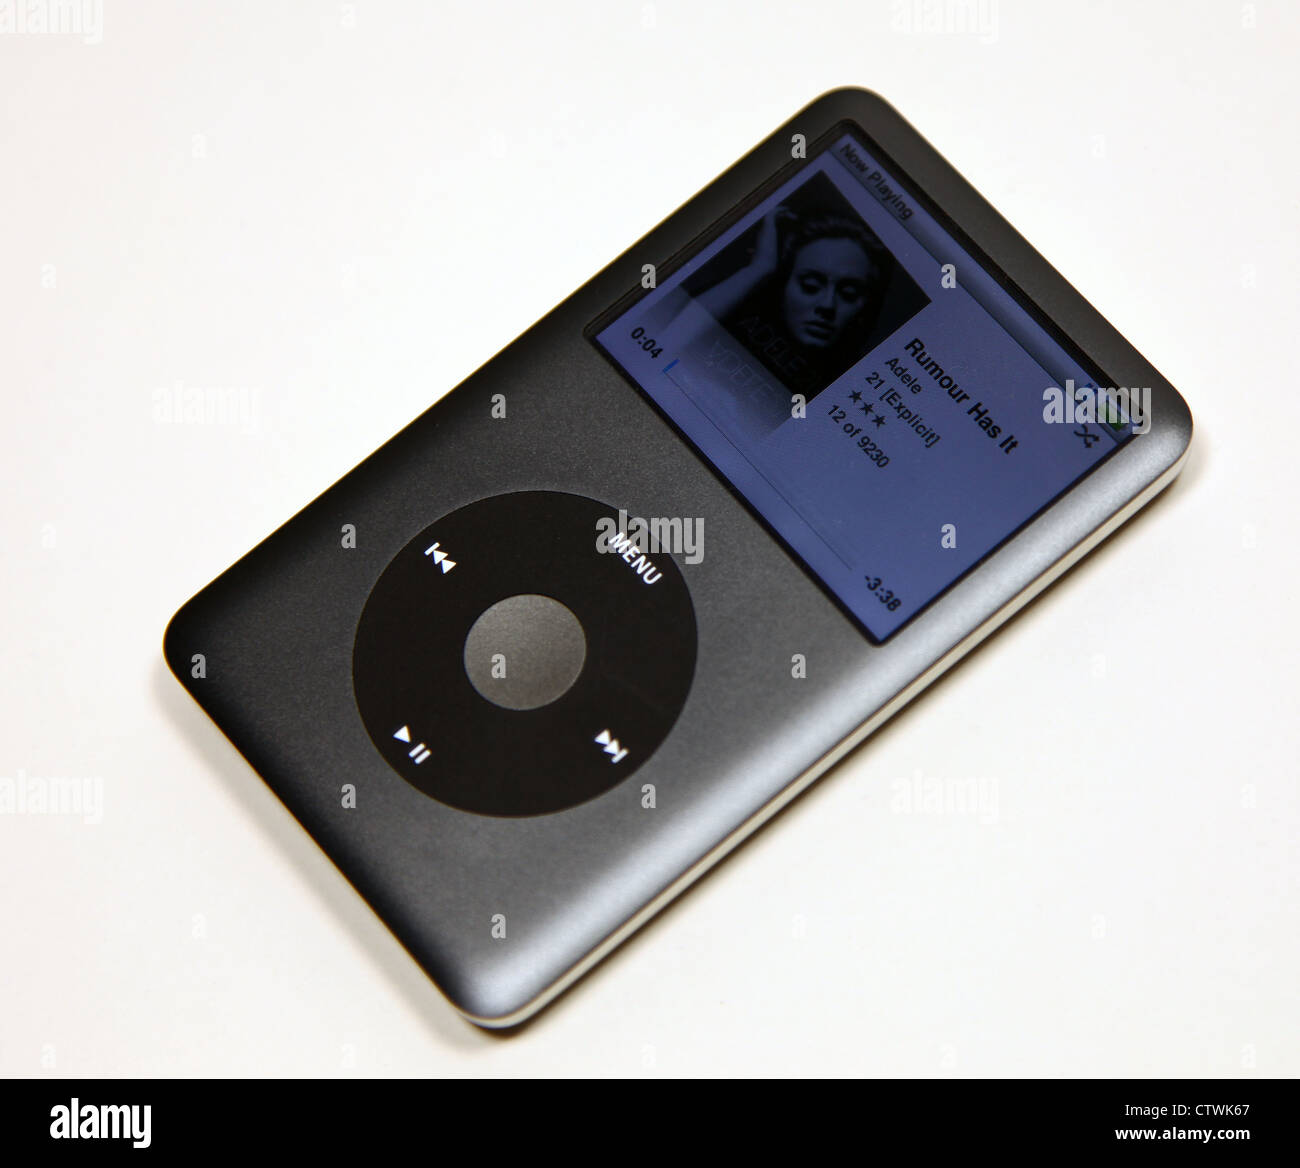 A 160 gb black ipod classic Stock Photo